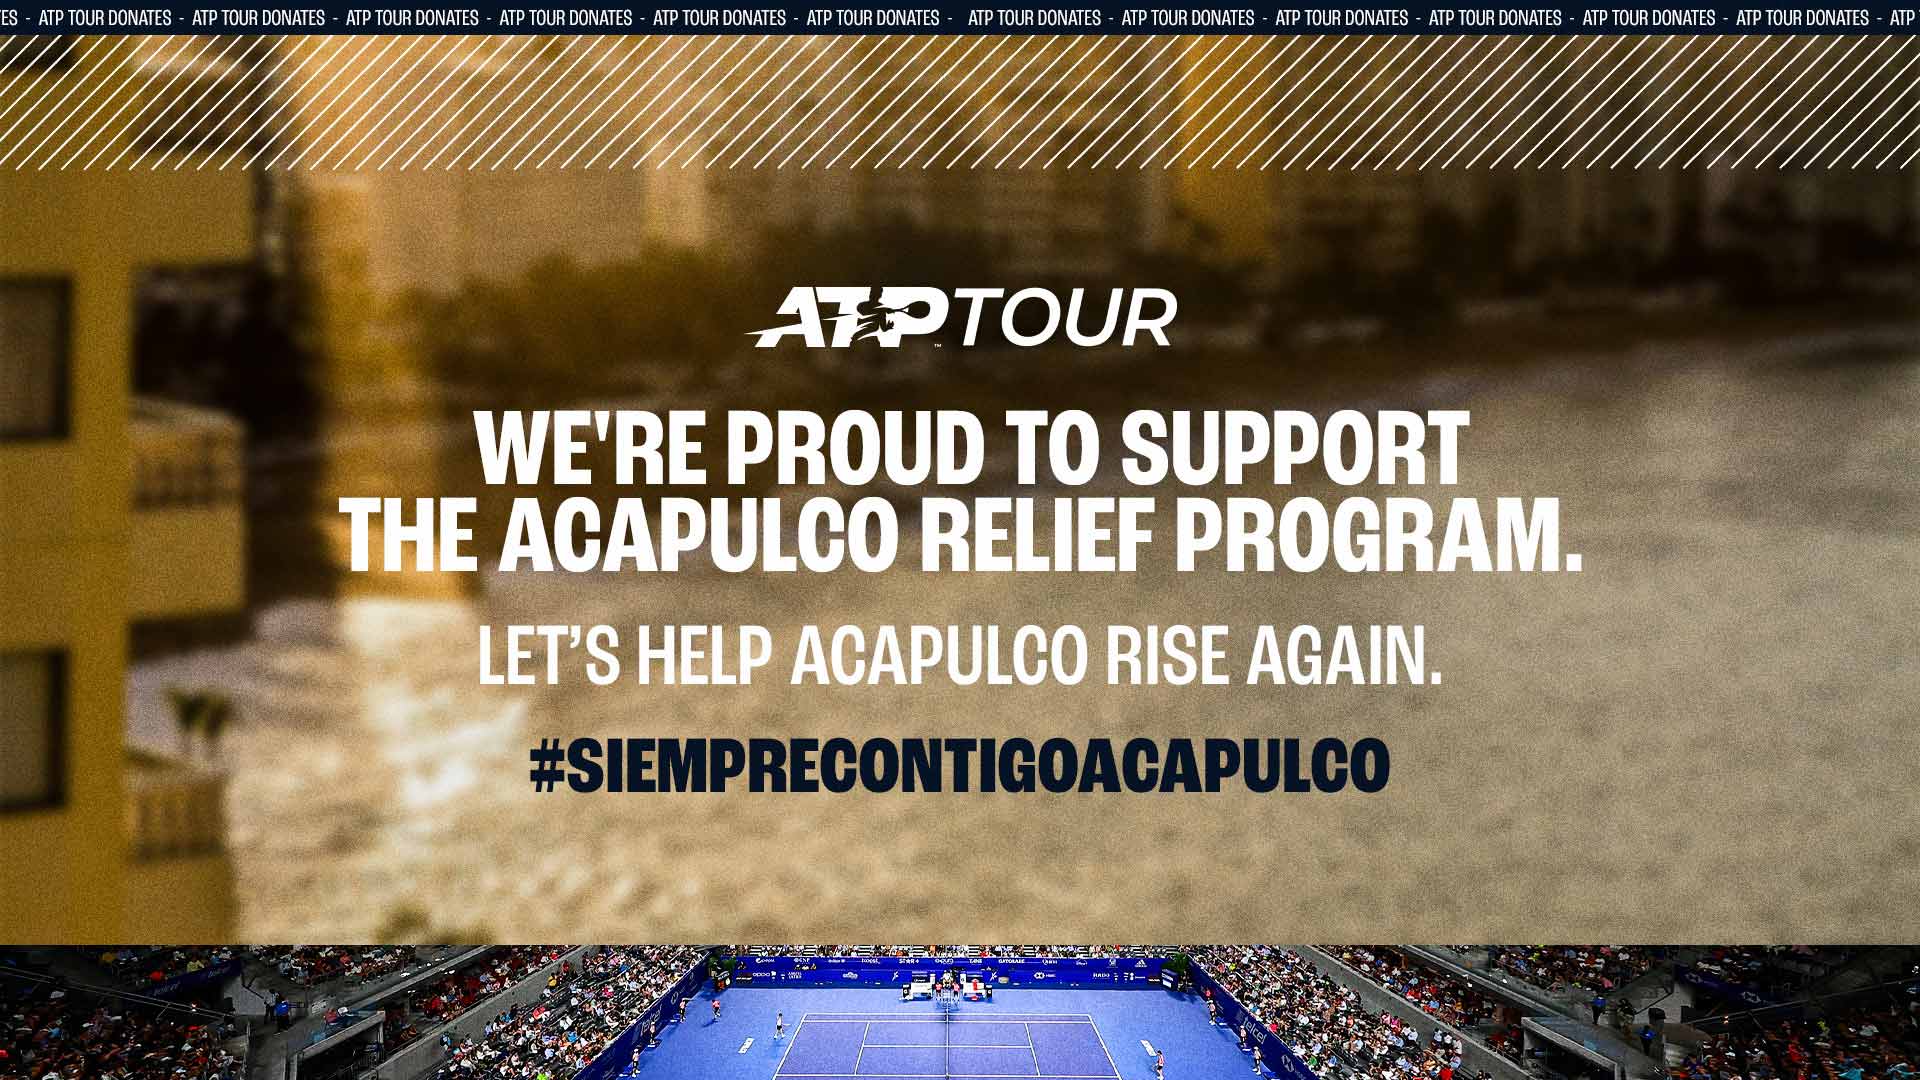 ATP donates to Acapulco relief efforts